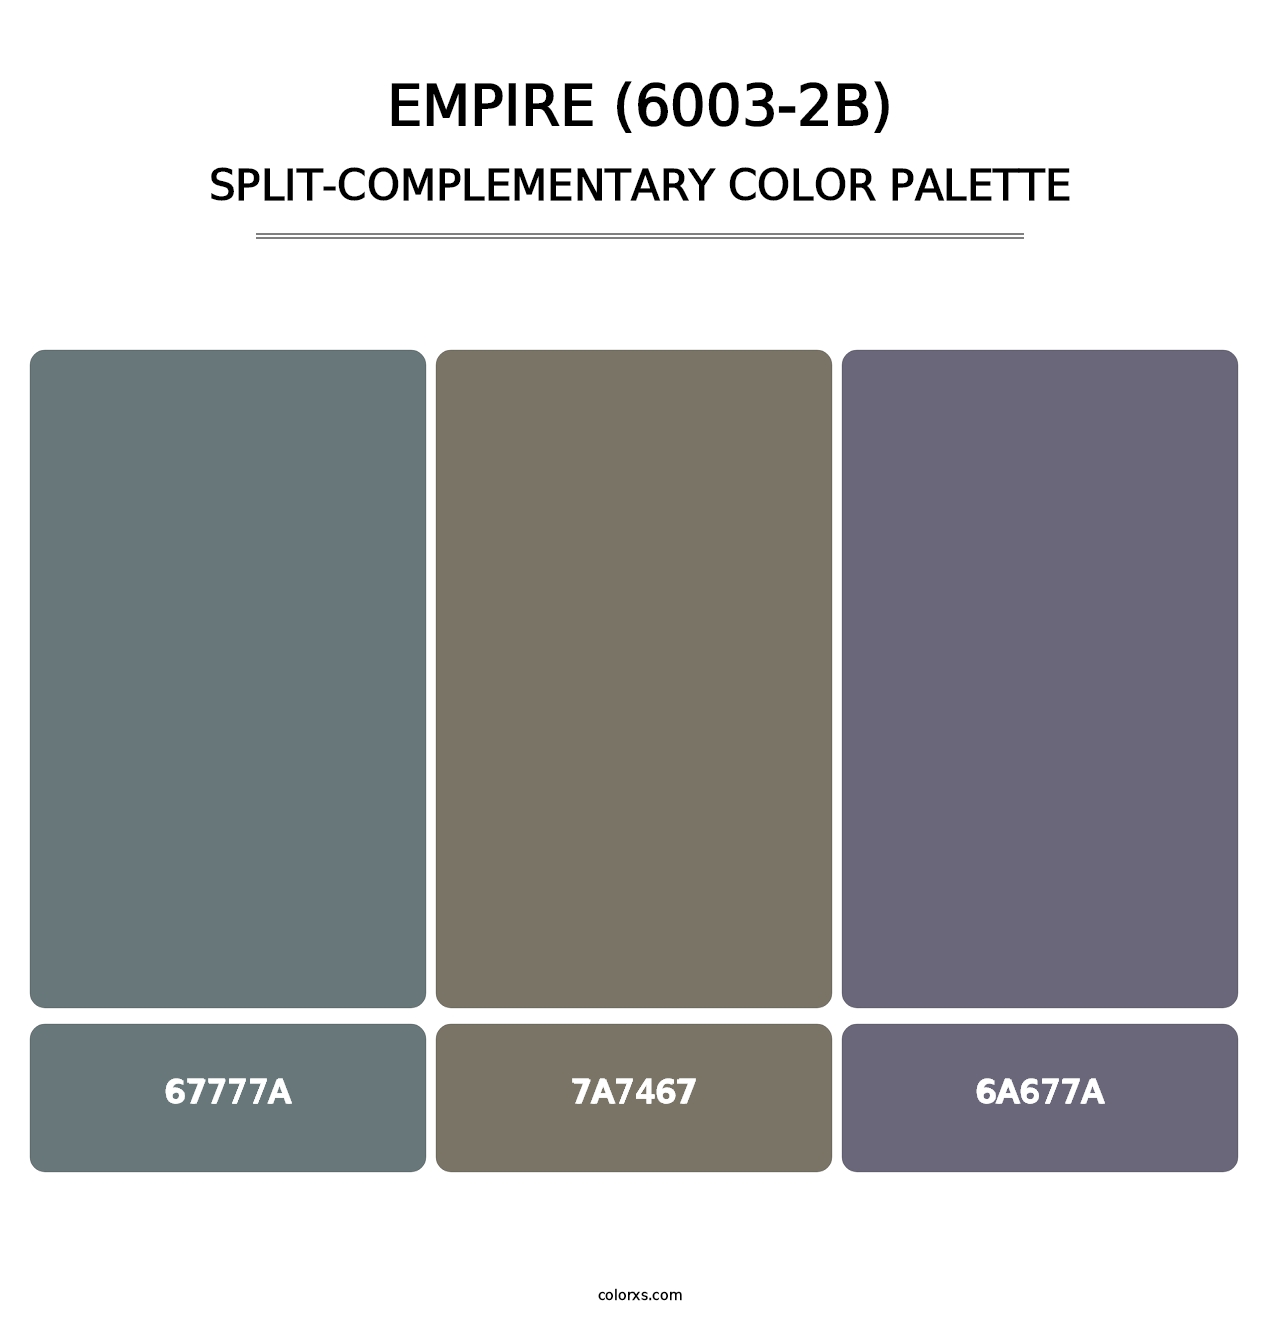 Empire (6003-2B) - Split-Complementary Color Palette